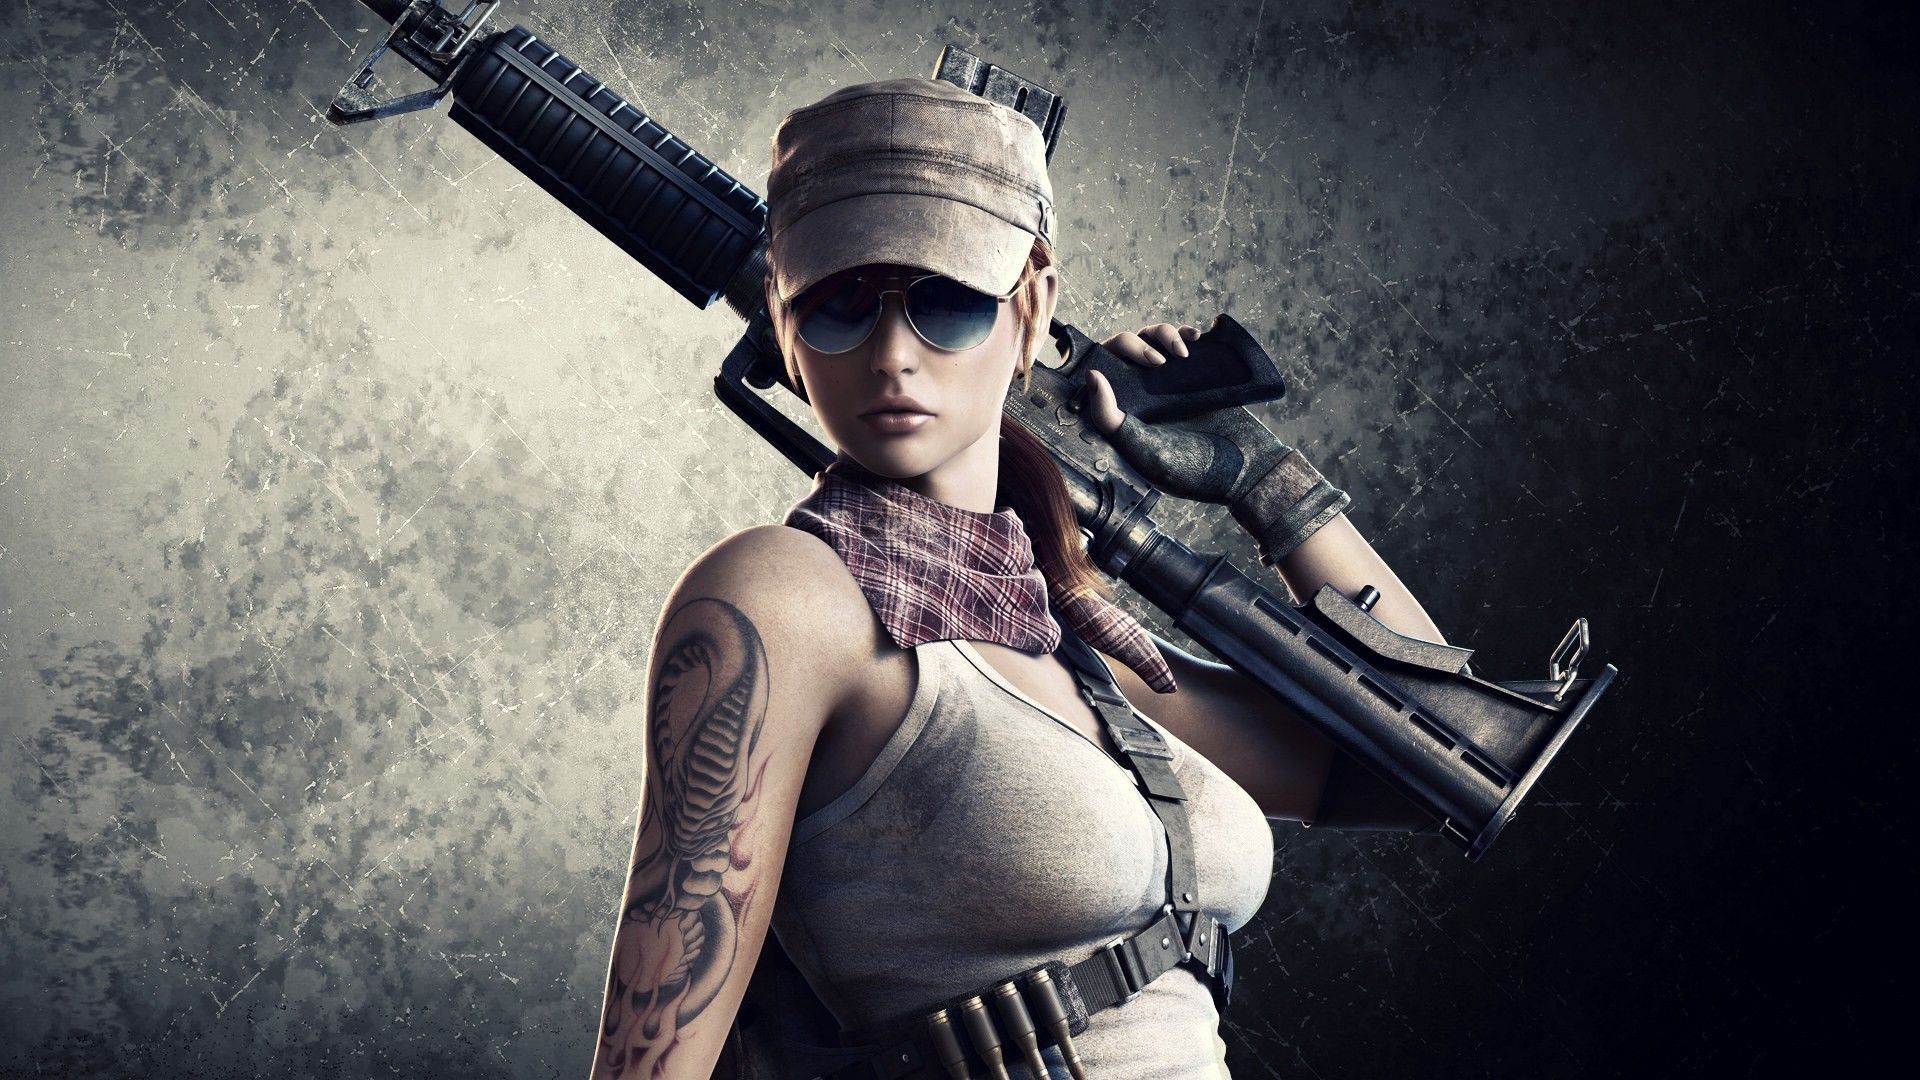 Tattooed Woman Soldier Wallpaper. Girl guns, Female soldier, Women